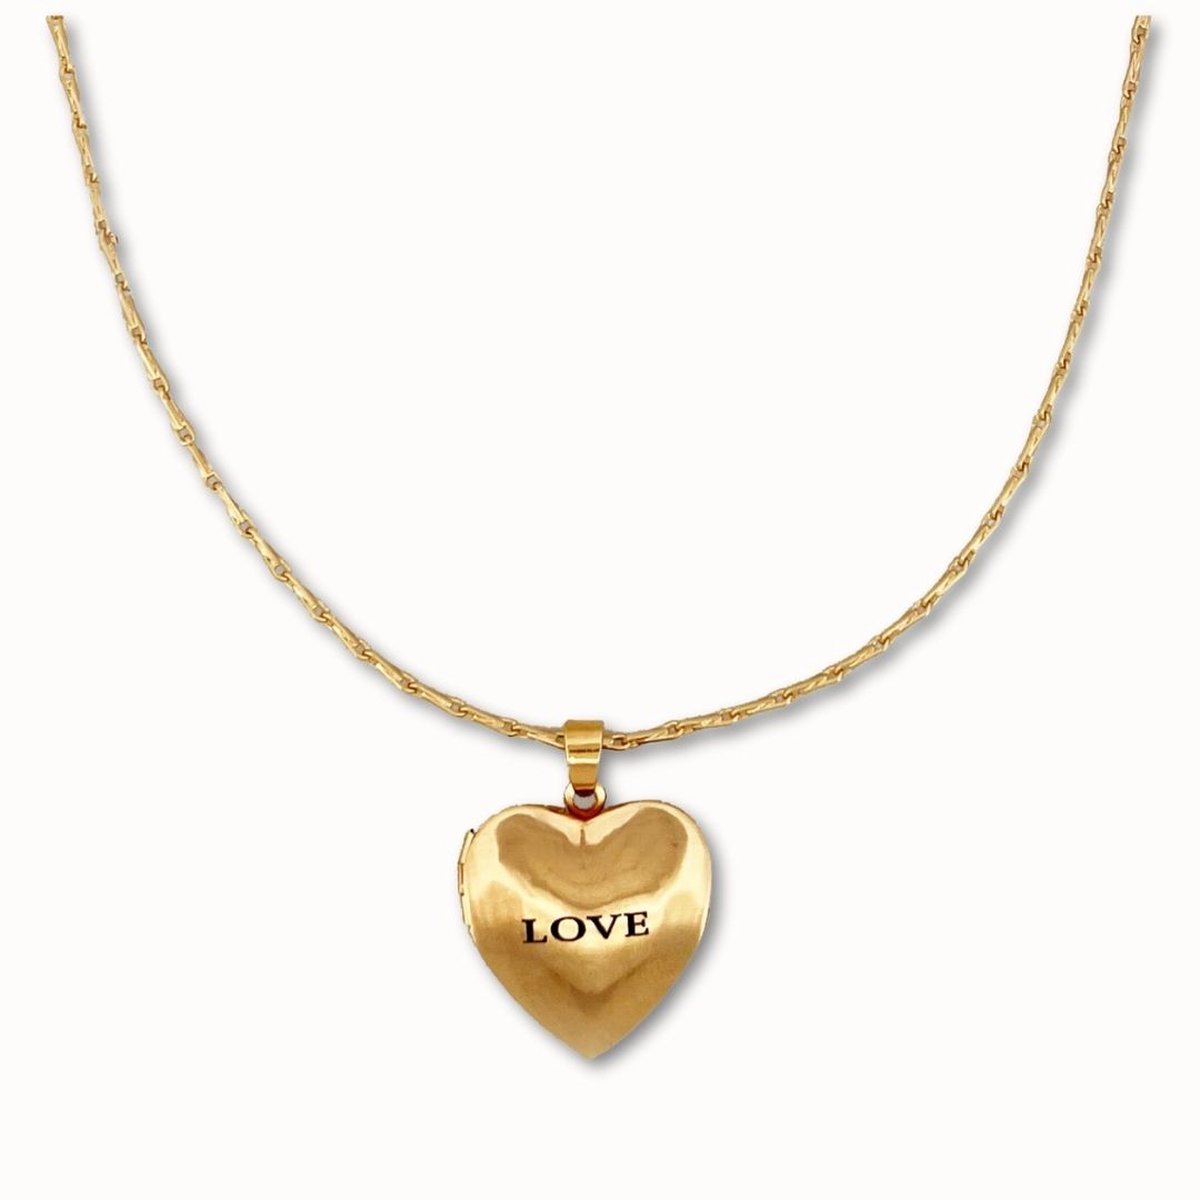 ByNouck Jewelry - Ketting Love Medallion - Sieraden - Vrouwen Ketting - Verguld - Liefde - Halsketting